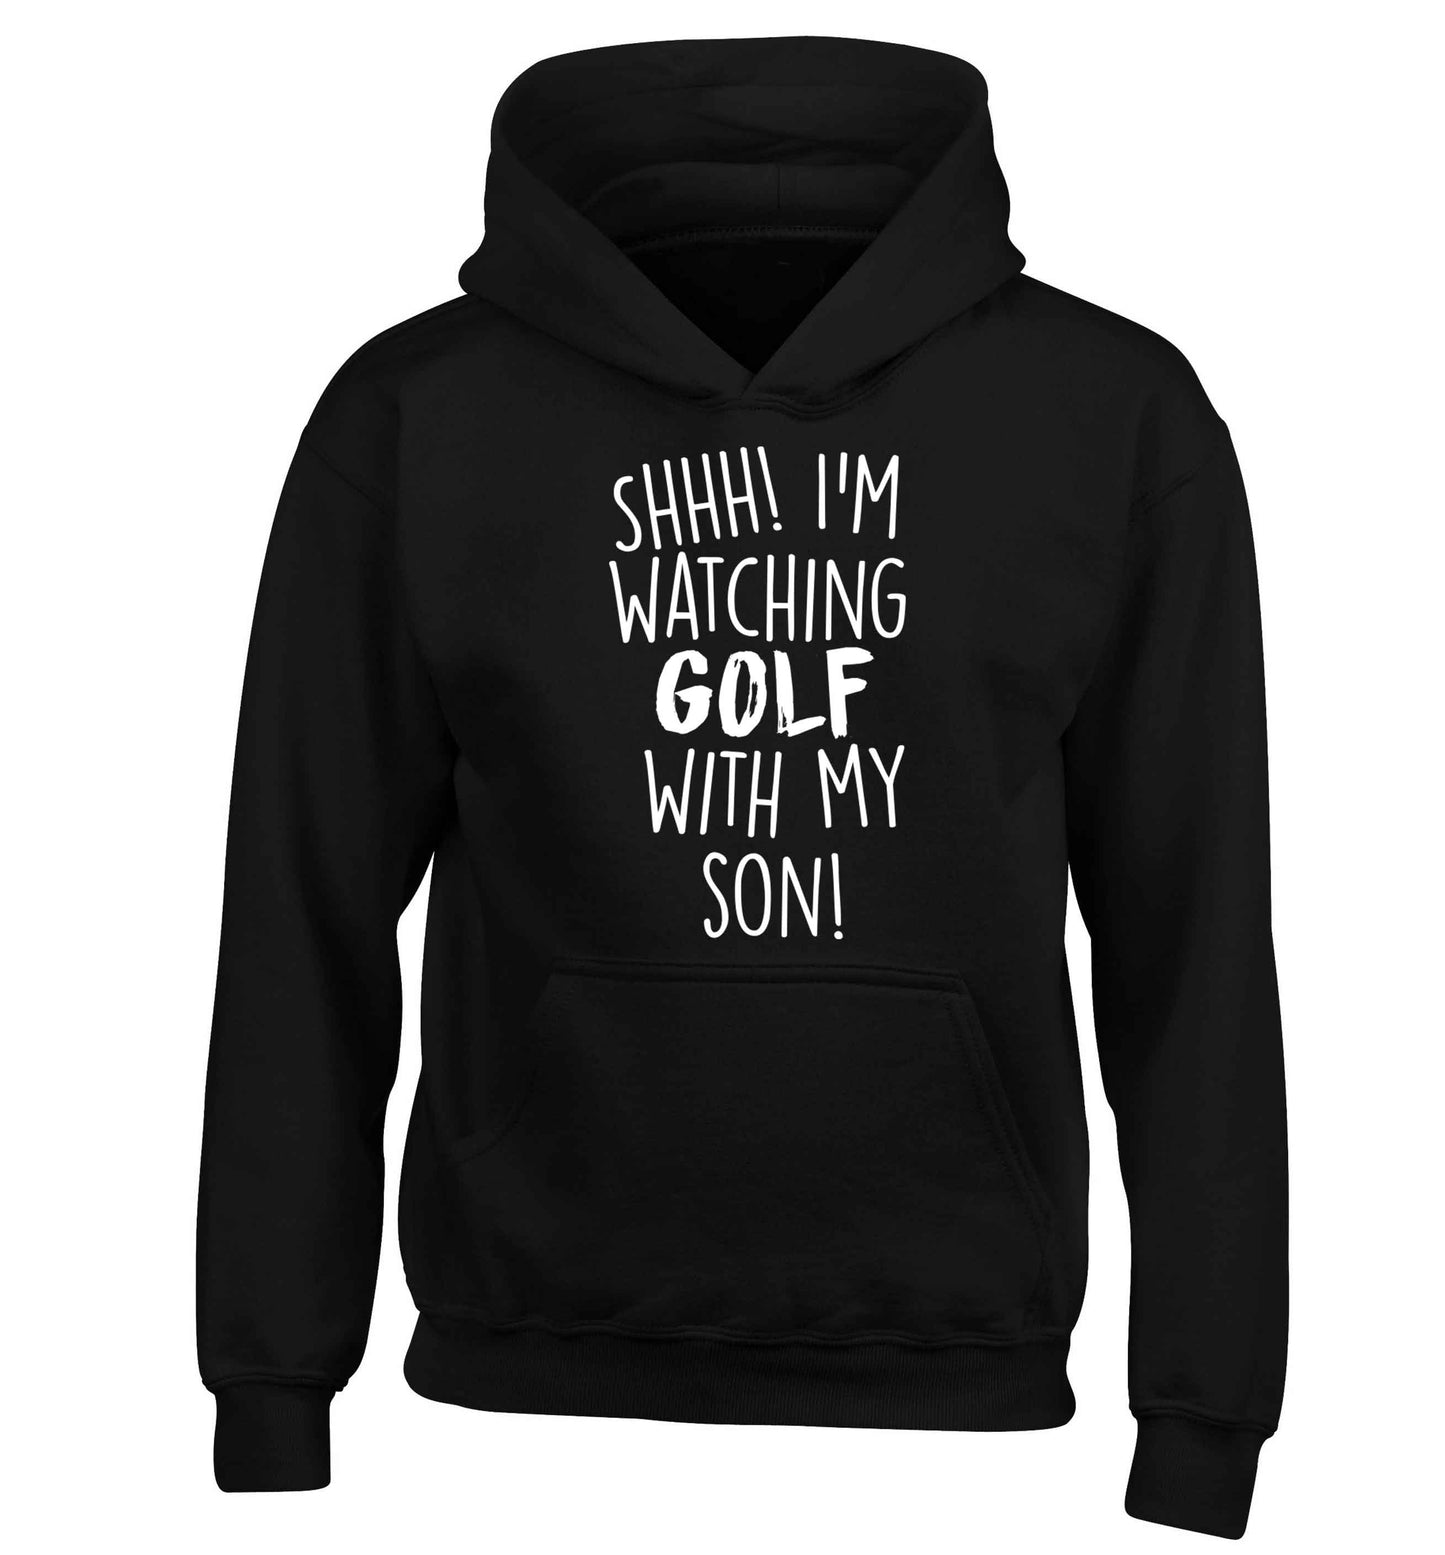 Shh I'm watching golf with my son children's black hoodie 12-13 Years